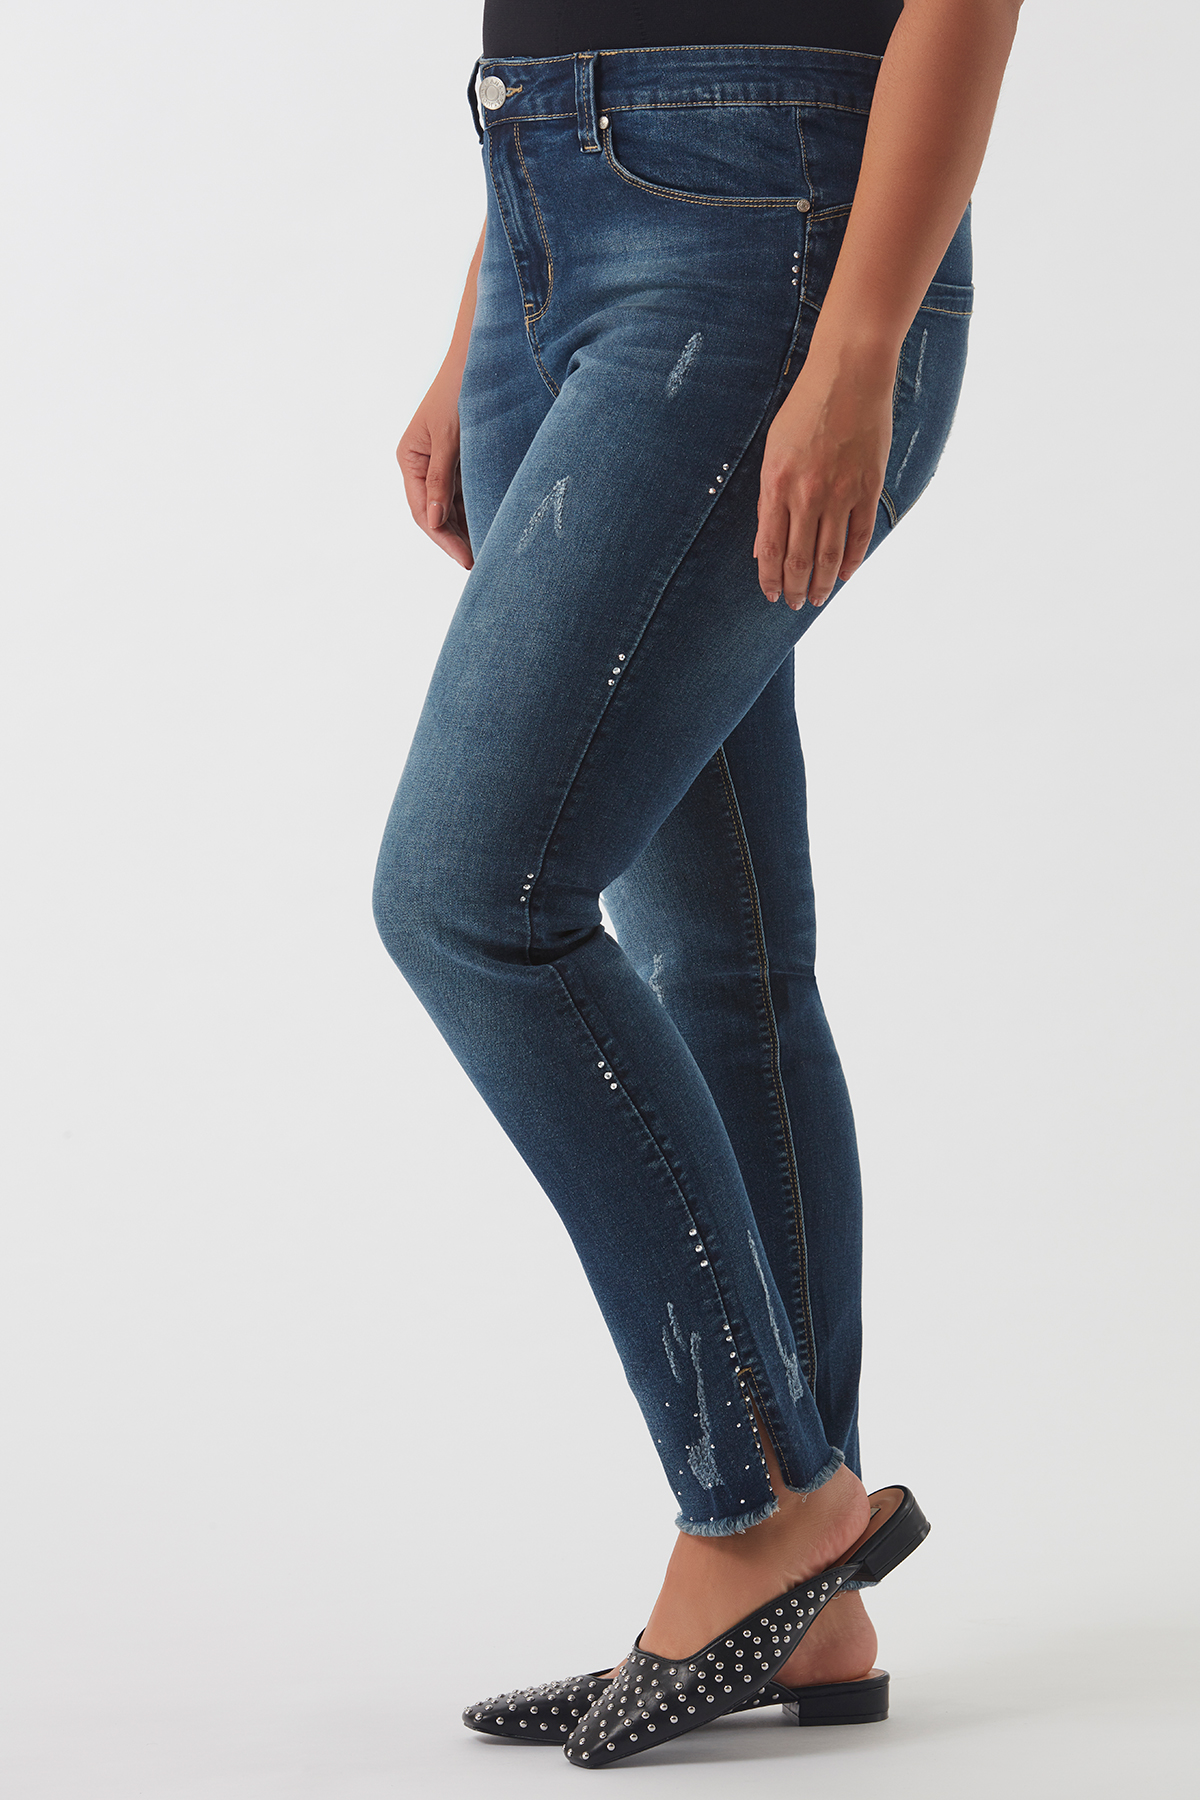 Dames BOTTOM LIFT jeans met strass stenen | MS Mode